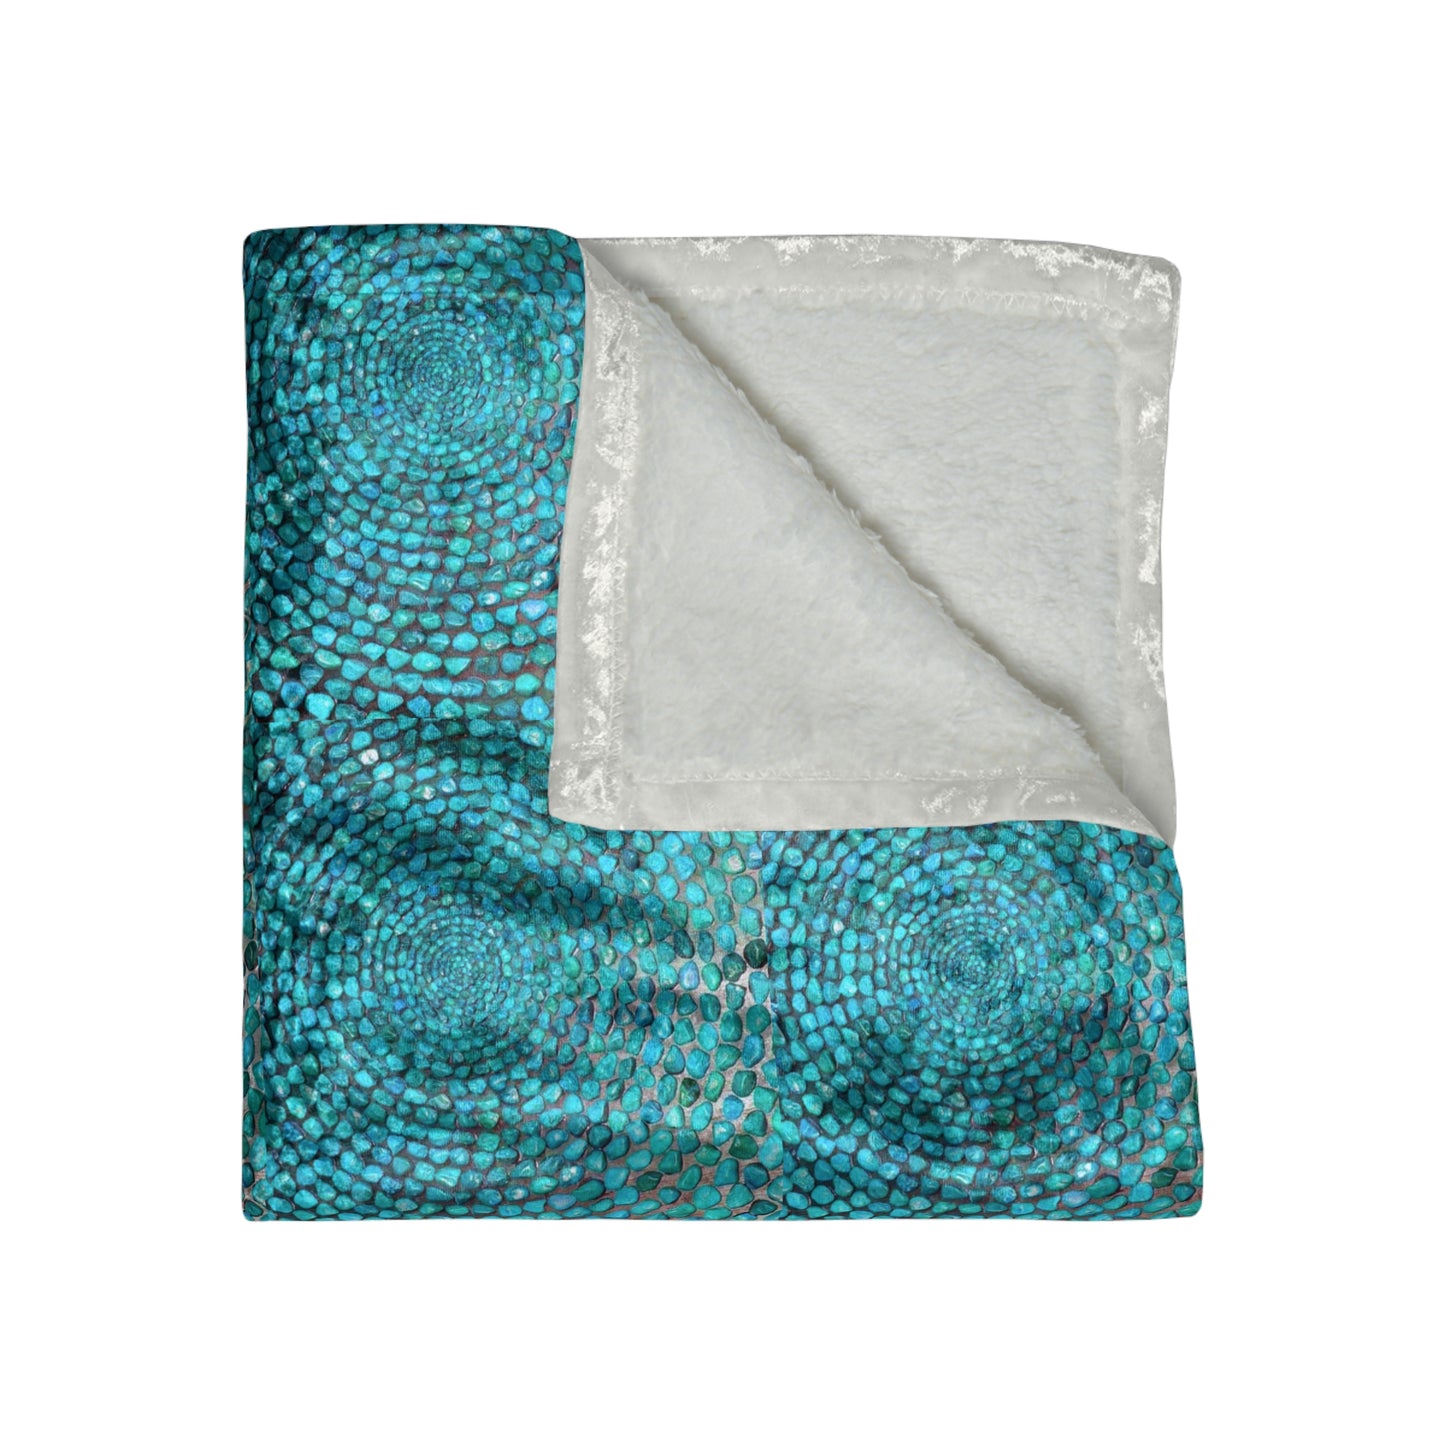 Turquoise Stones Crushed Cozy Warm Lounge Shimmer Velvet Blanket